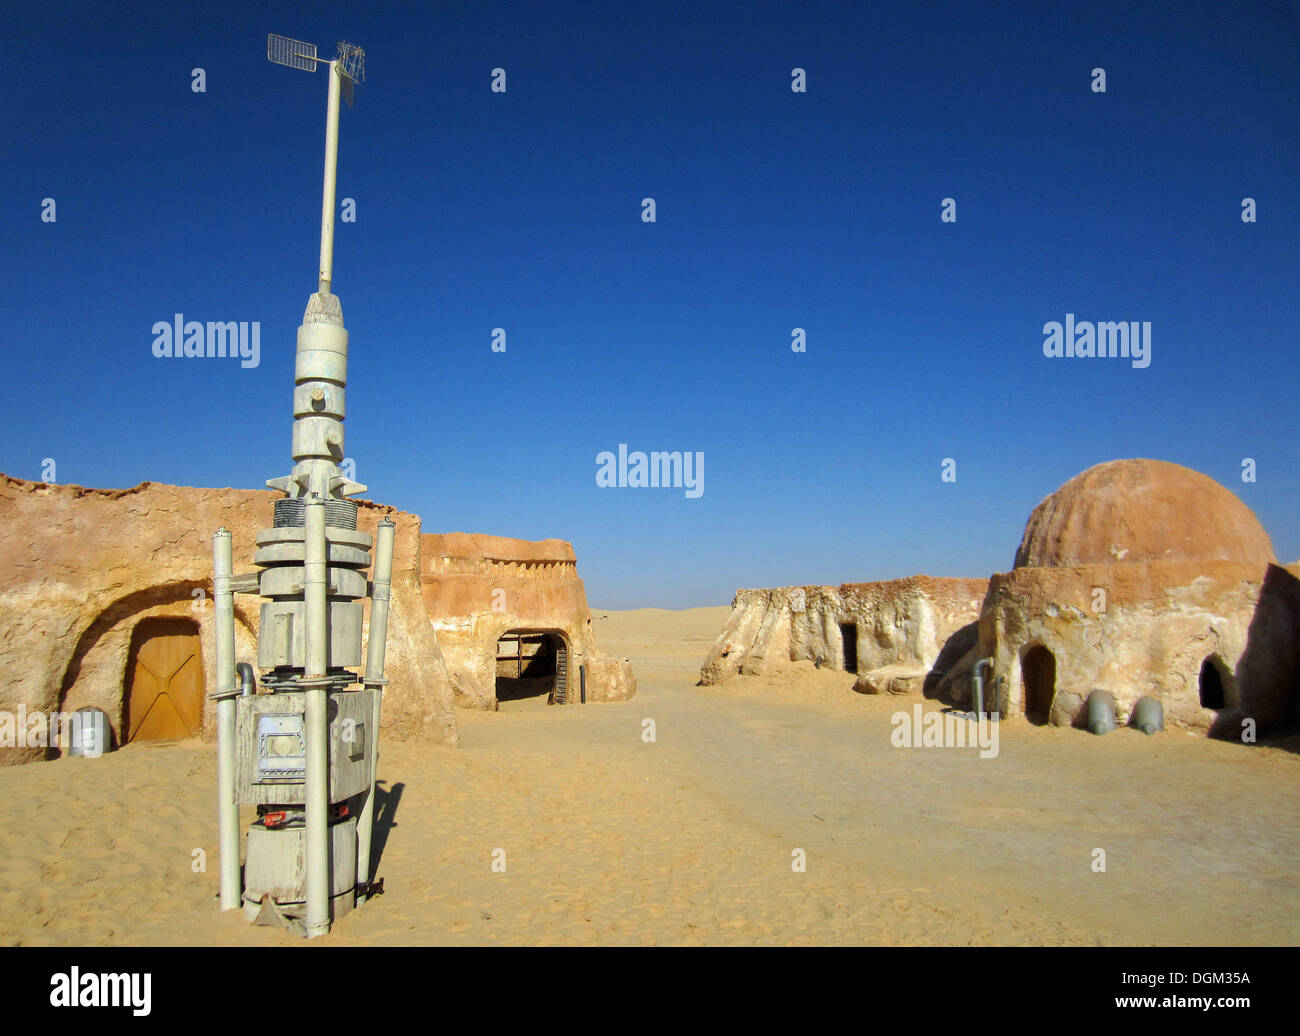 The set for 'Star Wars' in the desert in Nefta, Tunisia, on 4 October 2013. Stock Photo